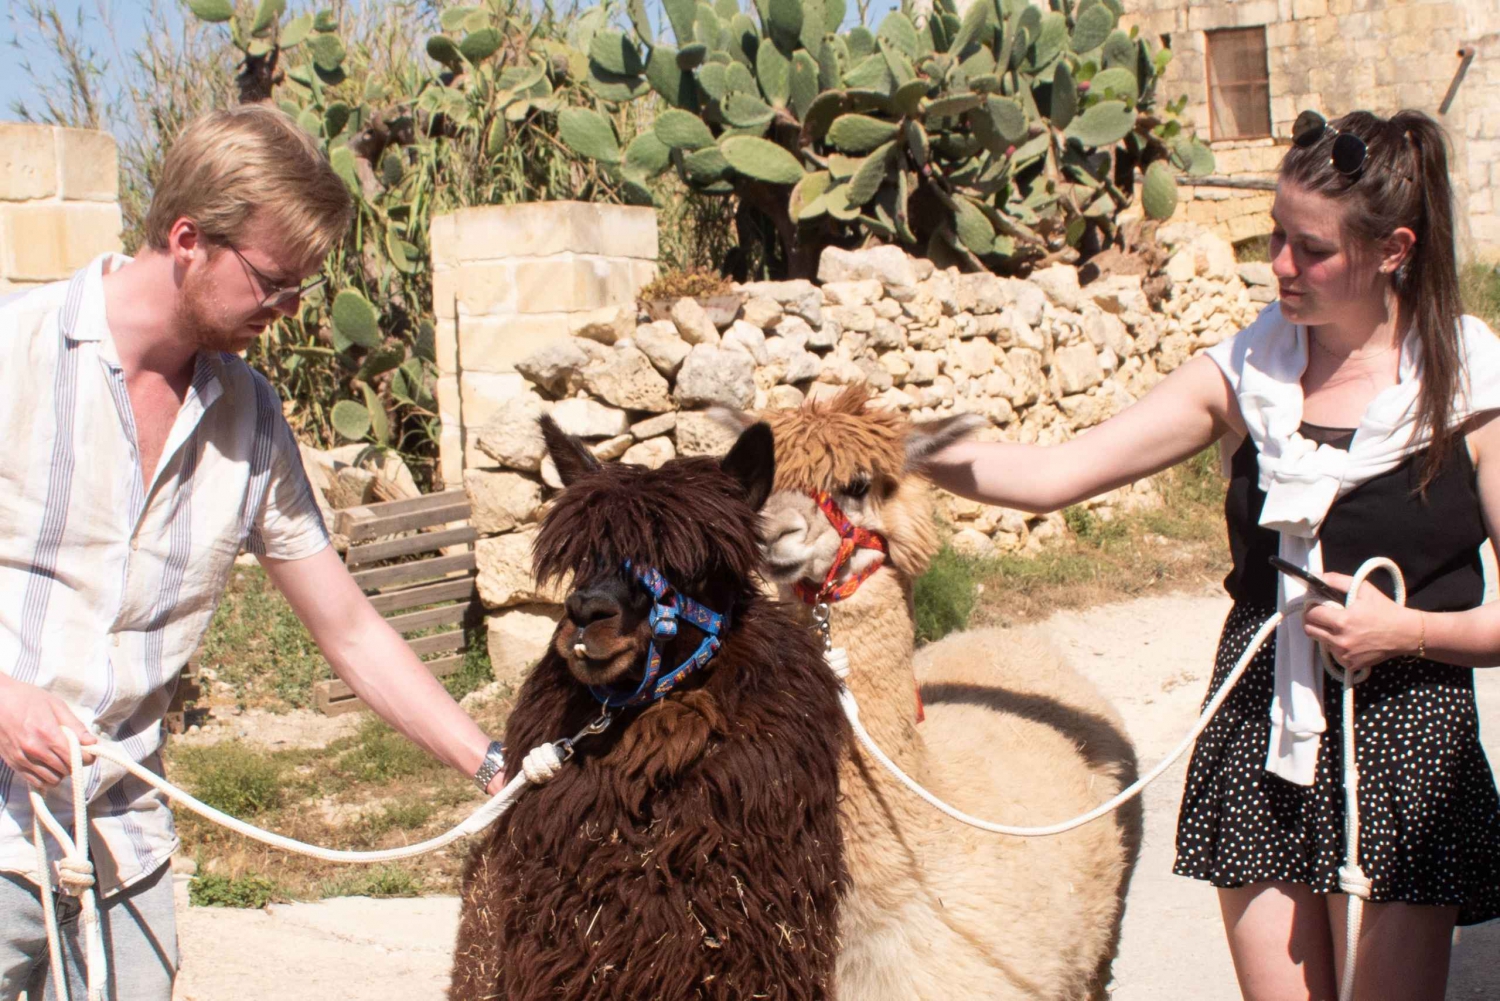 Gozo: Alpaca Walks and farm visit